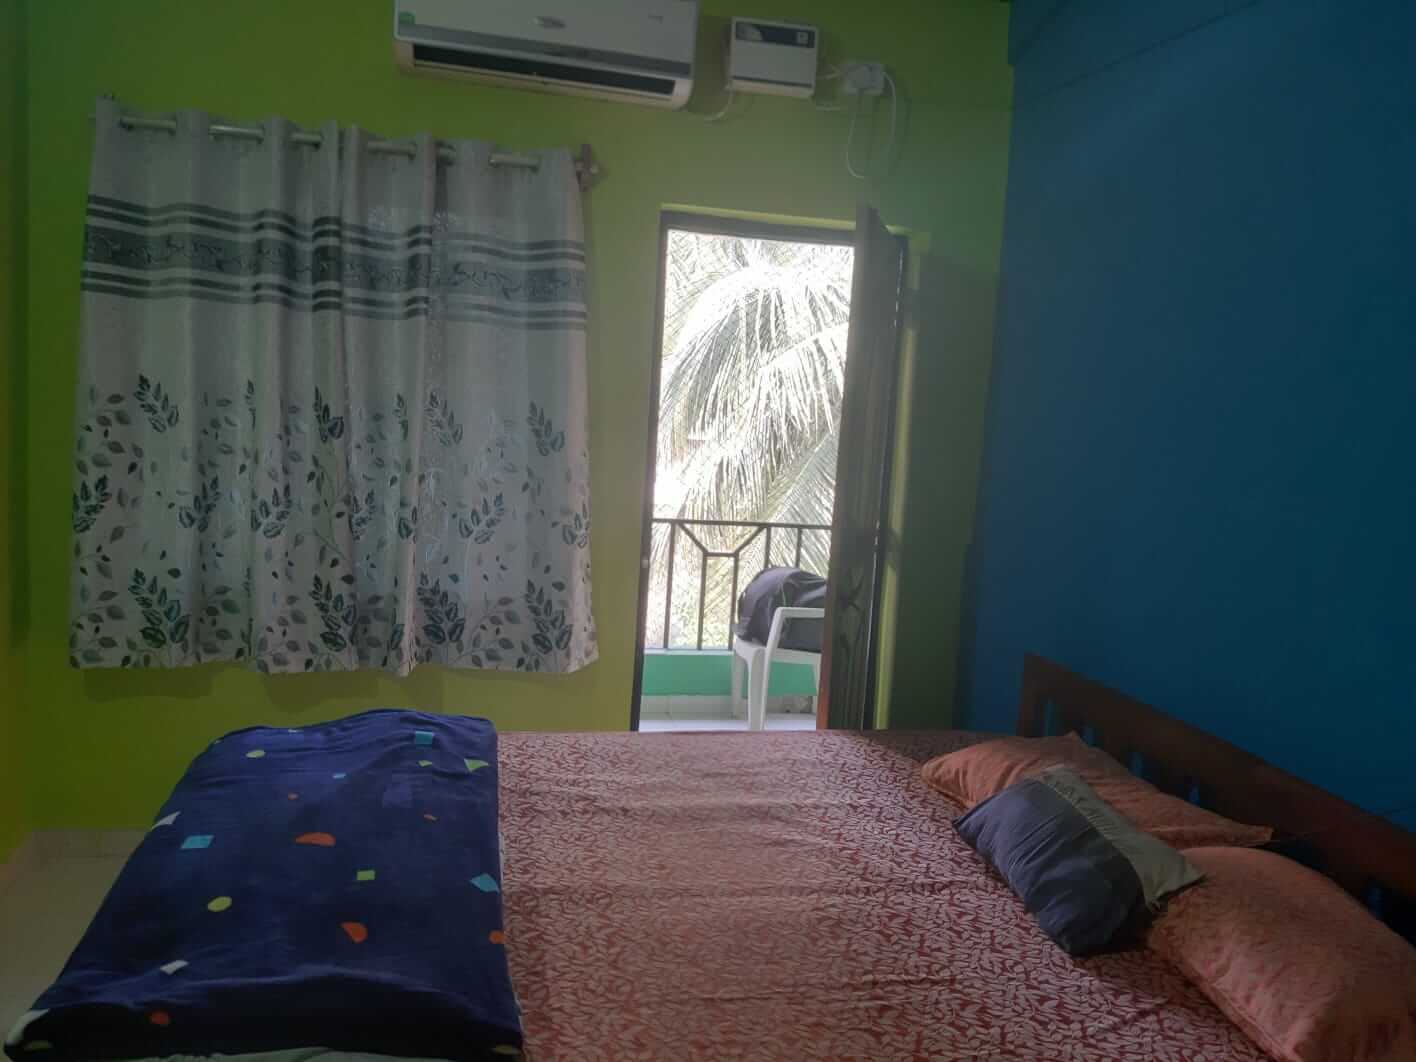 2 BHK Apartment / Flat for Rent 1130 Sq. Feet at Goa
, Siolim